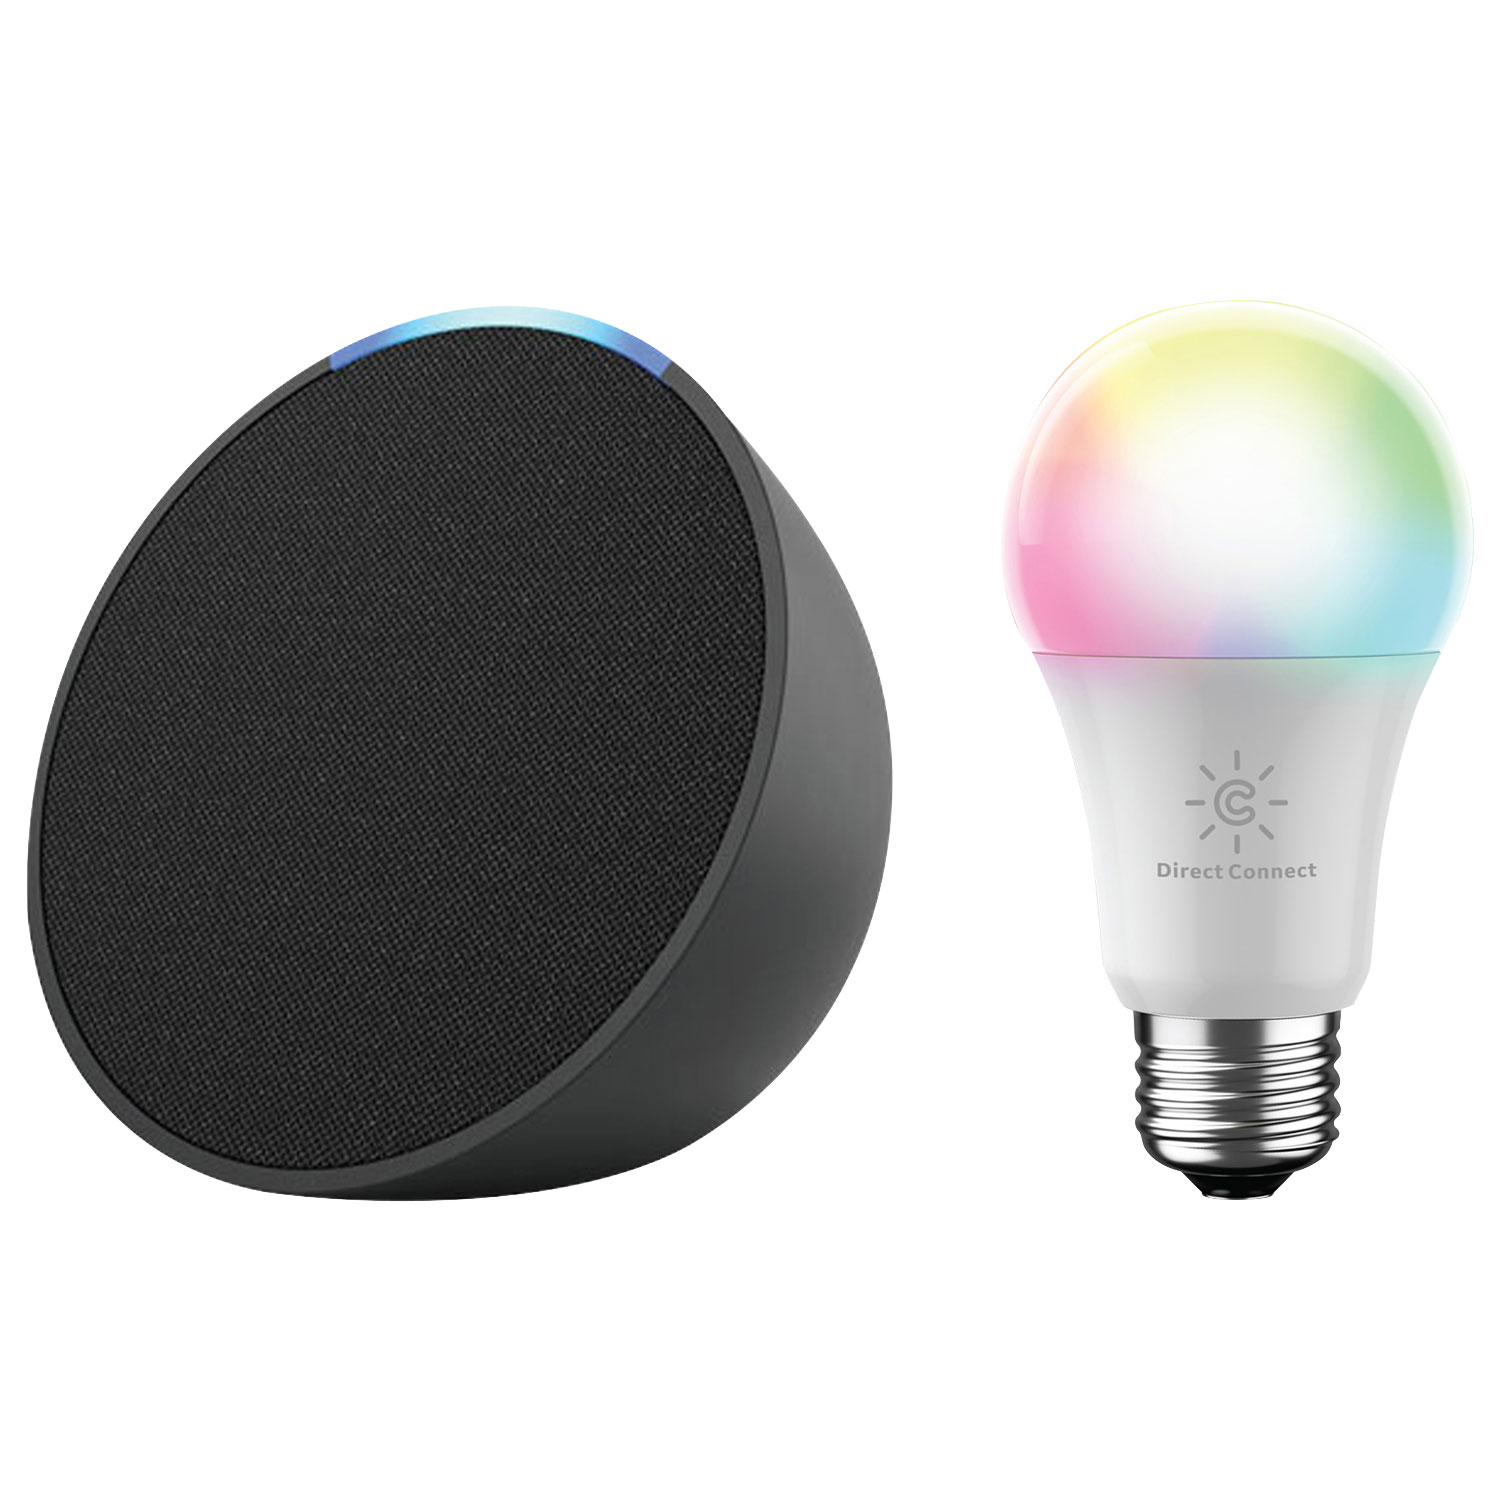 Amazon Echo Pop Smart Speaker with Alexa & Cync A19 Smart LED Light Bulb - Charcoal